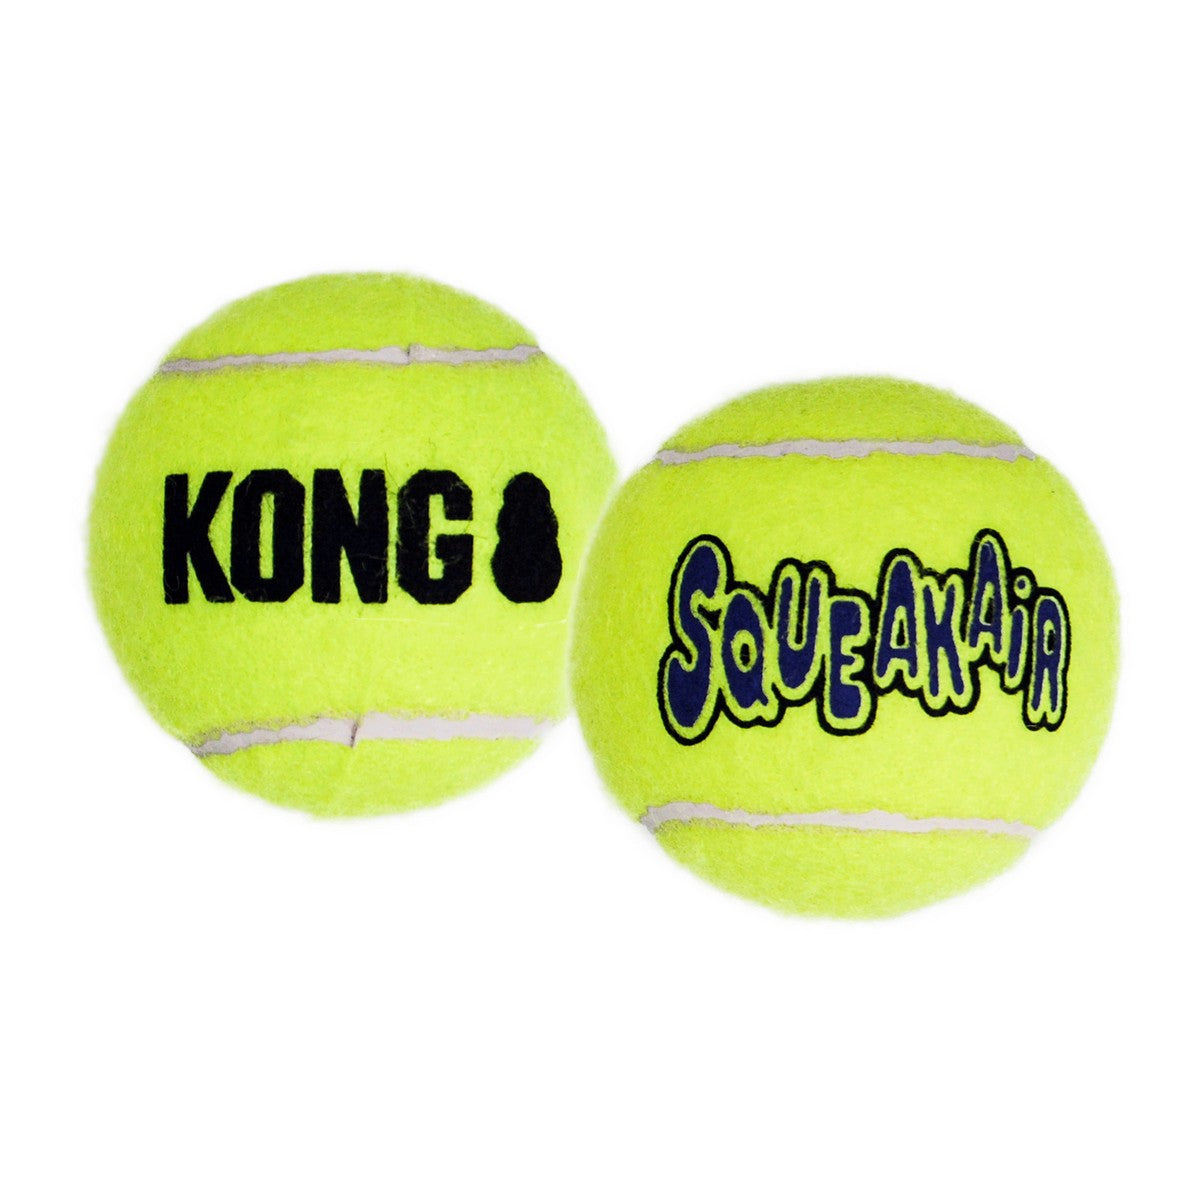 KONG Air Squeaker Tennis Ball Gelb